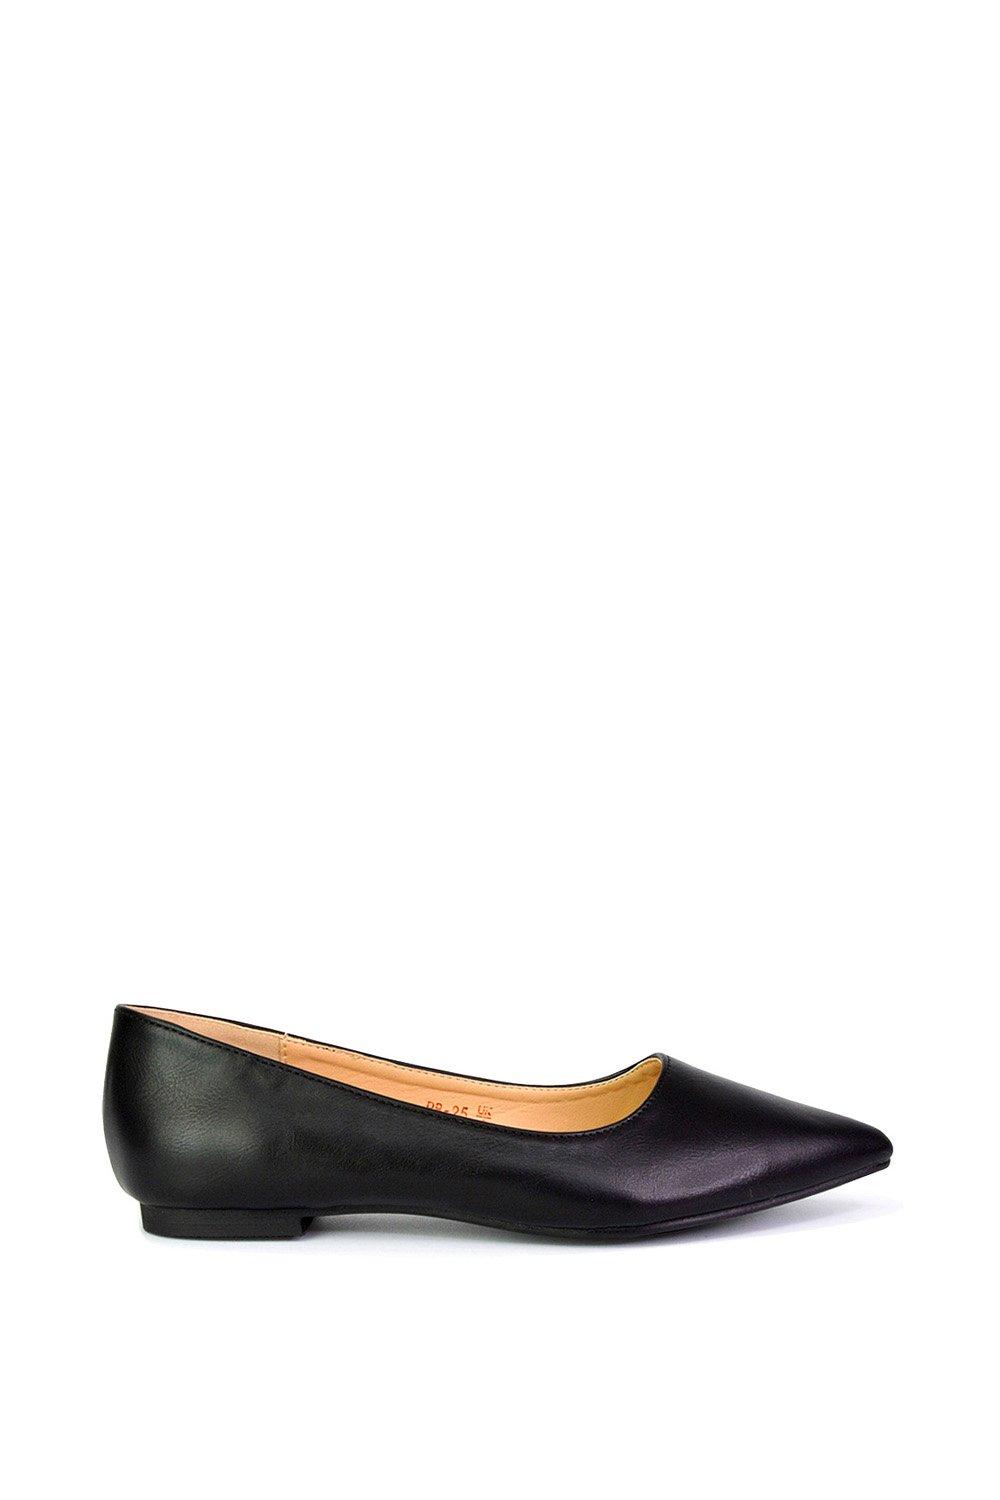 XY London Women's 'Bubbles' Pointed Toe Slip on Flat Ballerina Pump Shoes|Size: 8|black